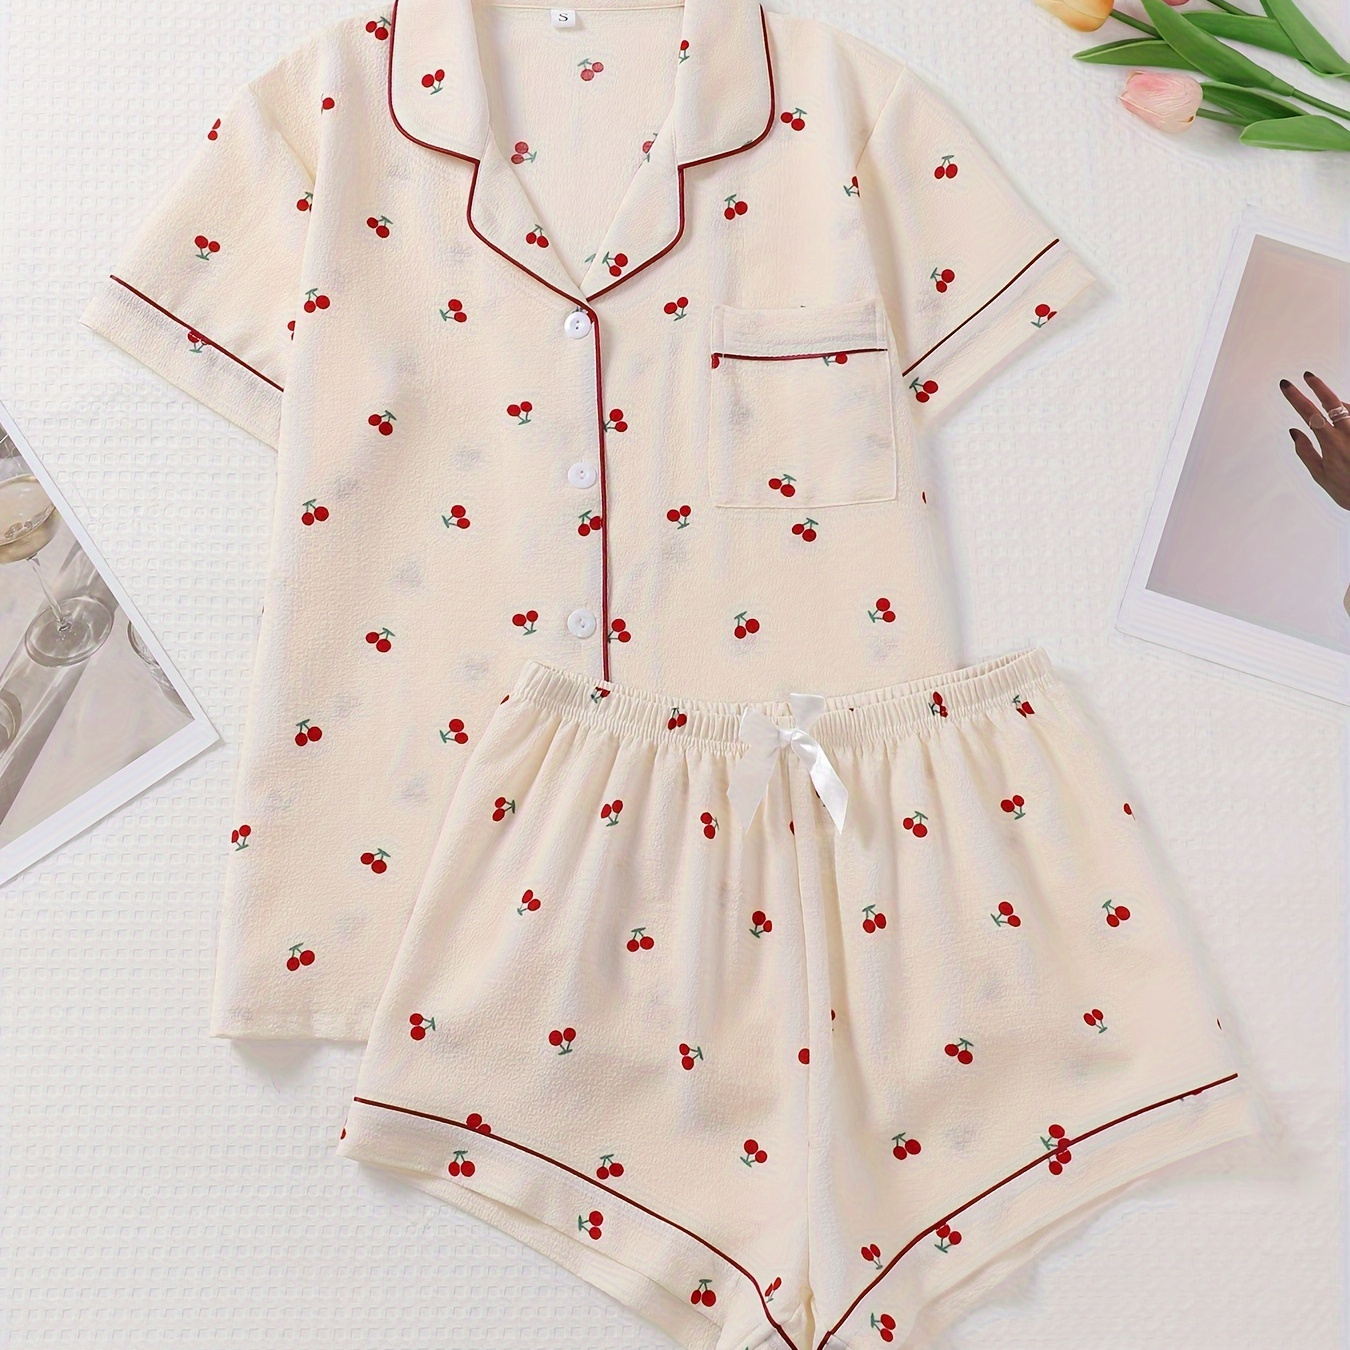 

Allover Cherry Print Textured Pajama Set, Cute Short Sleeve Buttons Lapel Top & Elastic Shorts, Women's Sleepwear